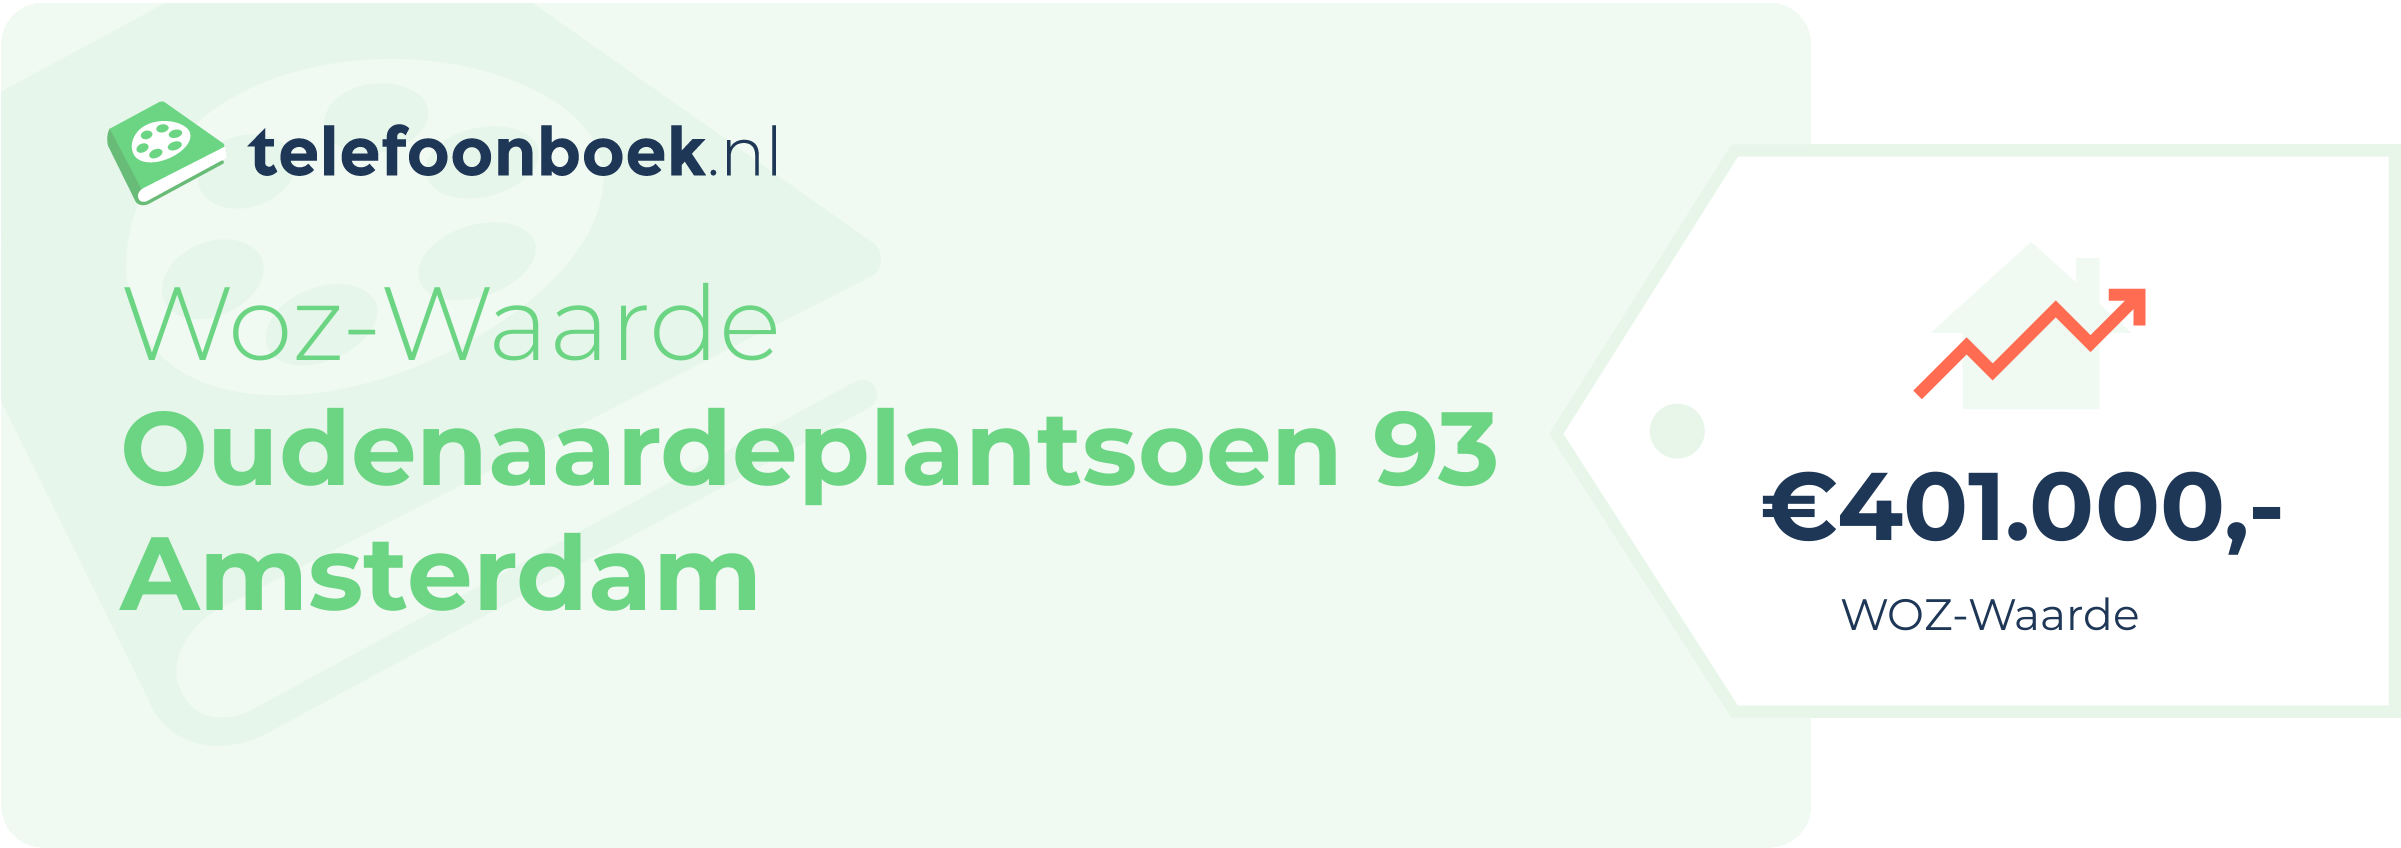 WOZ-waarde Oudenaardeplantsoen 93 Amsterdam